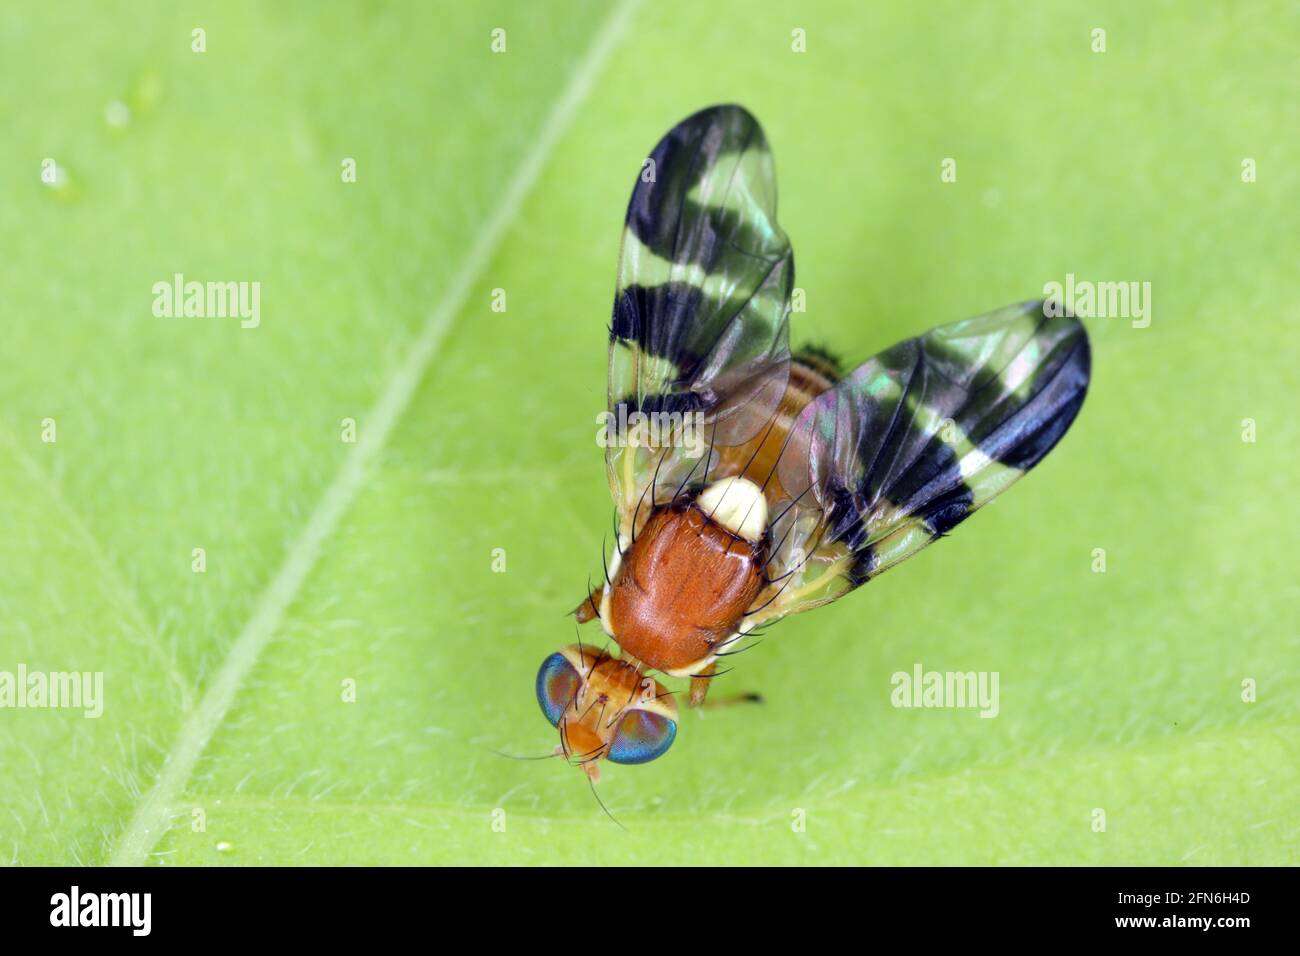 Walnut husk fly (Rhagoletis completa) it is quarantine species of tephritid or fruit flies whose larvae damage walnuts. Stock Photo